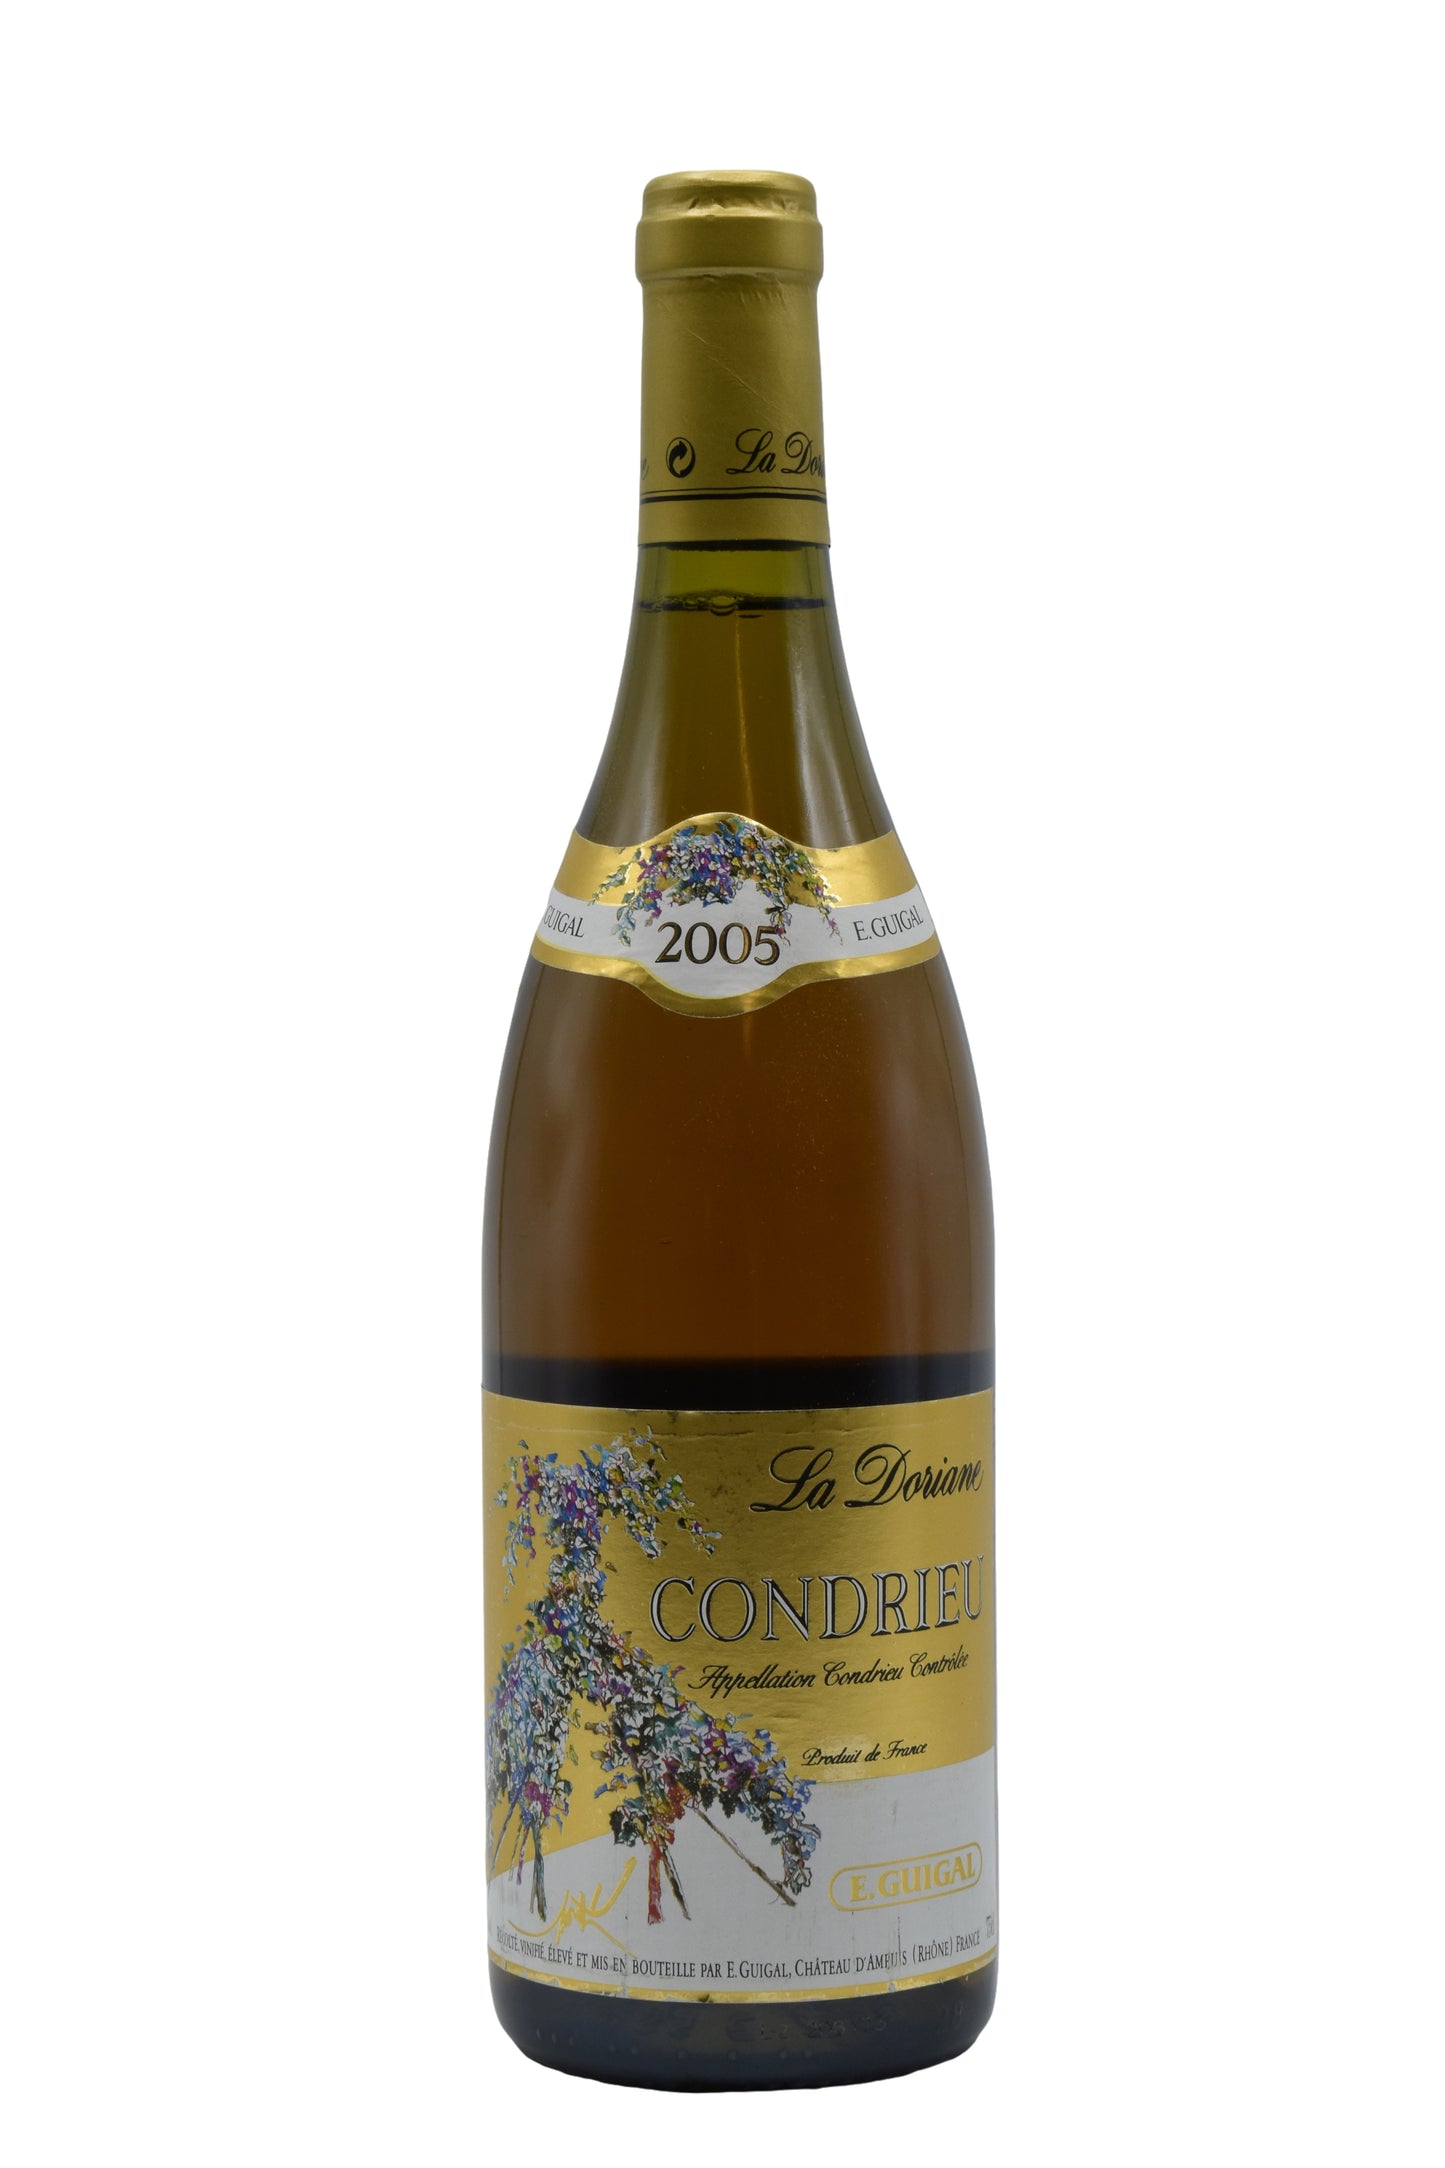 2005 E. Guigal, Condrieu la Doriane 750ml - Walker Wine Co.